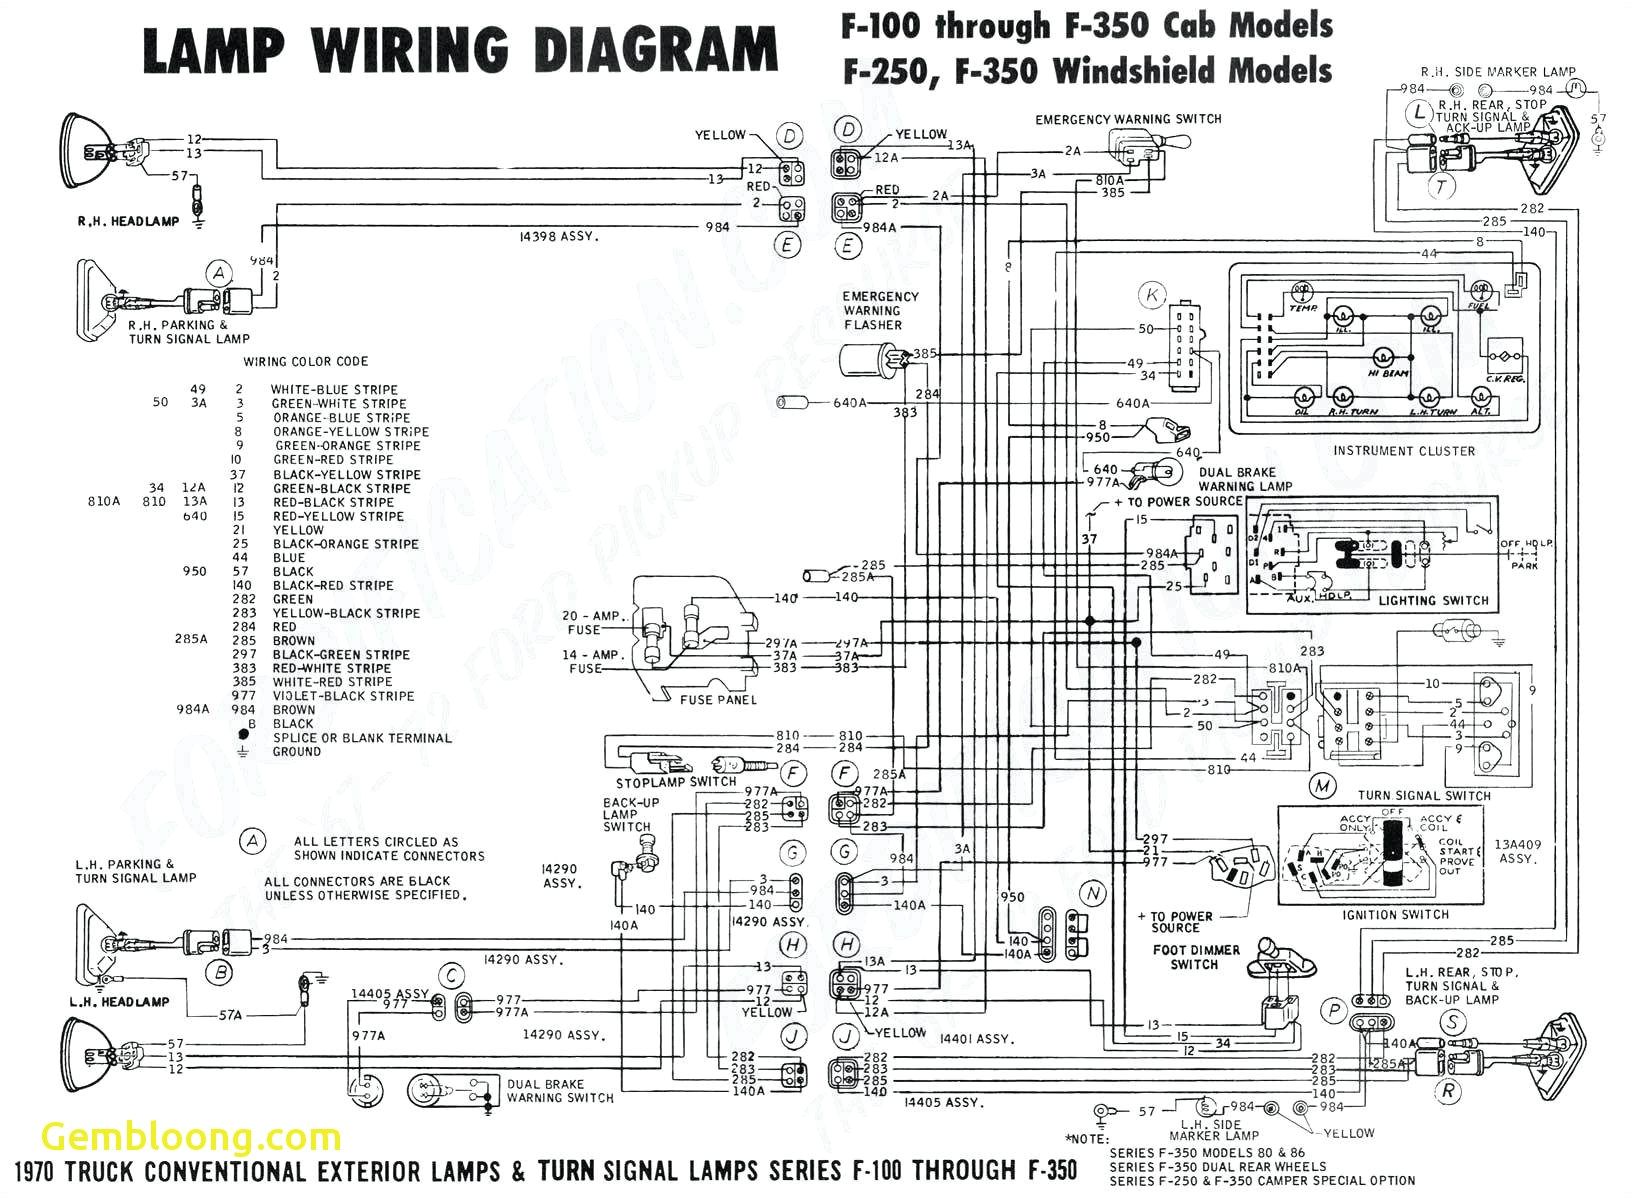 Bobcat S250 Wiring Diagram Oilfield Wiring Diagrams Wiring Diagram